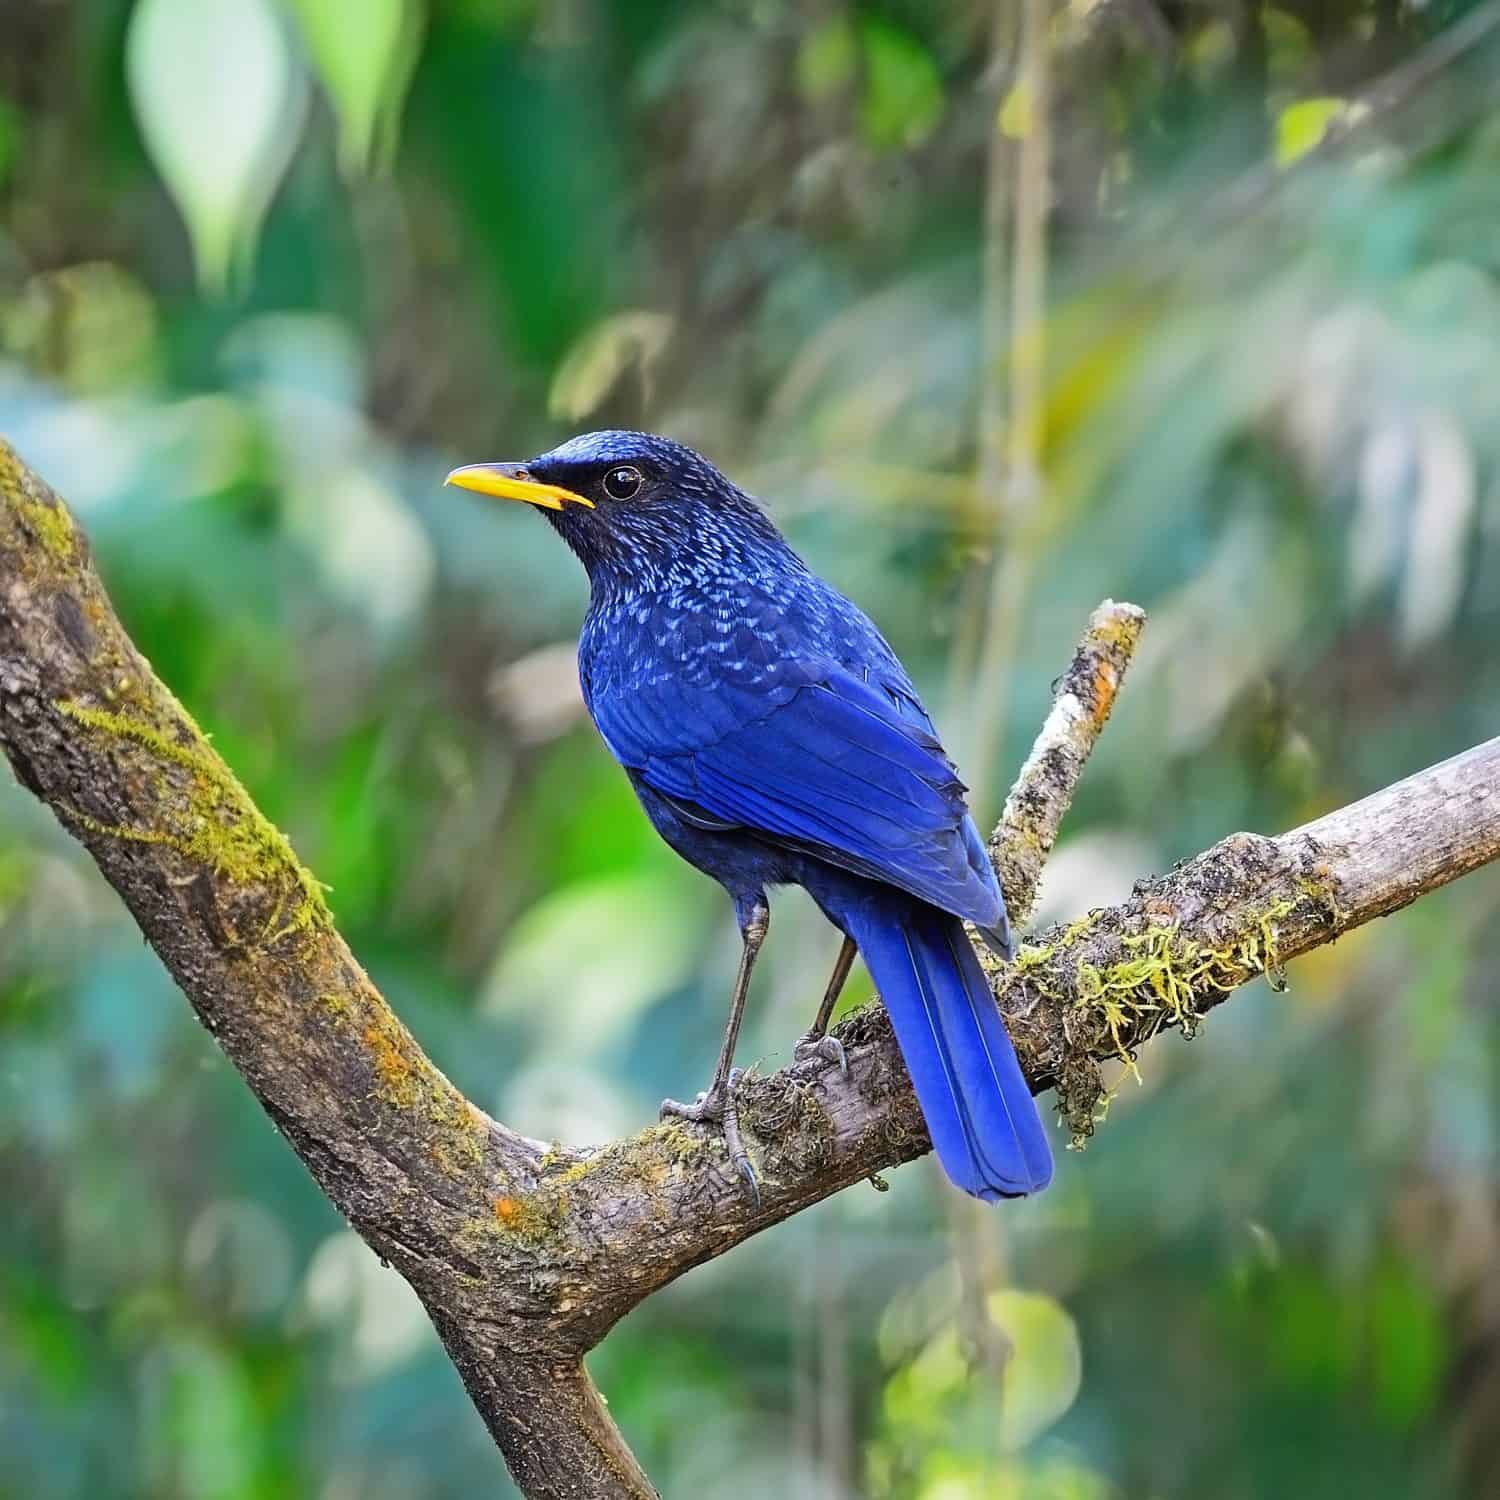 Purplish-blue bird, Blue Whistling Thrush (Myophonus caeruleus), yellow bill, standing on a branch